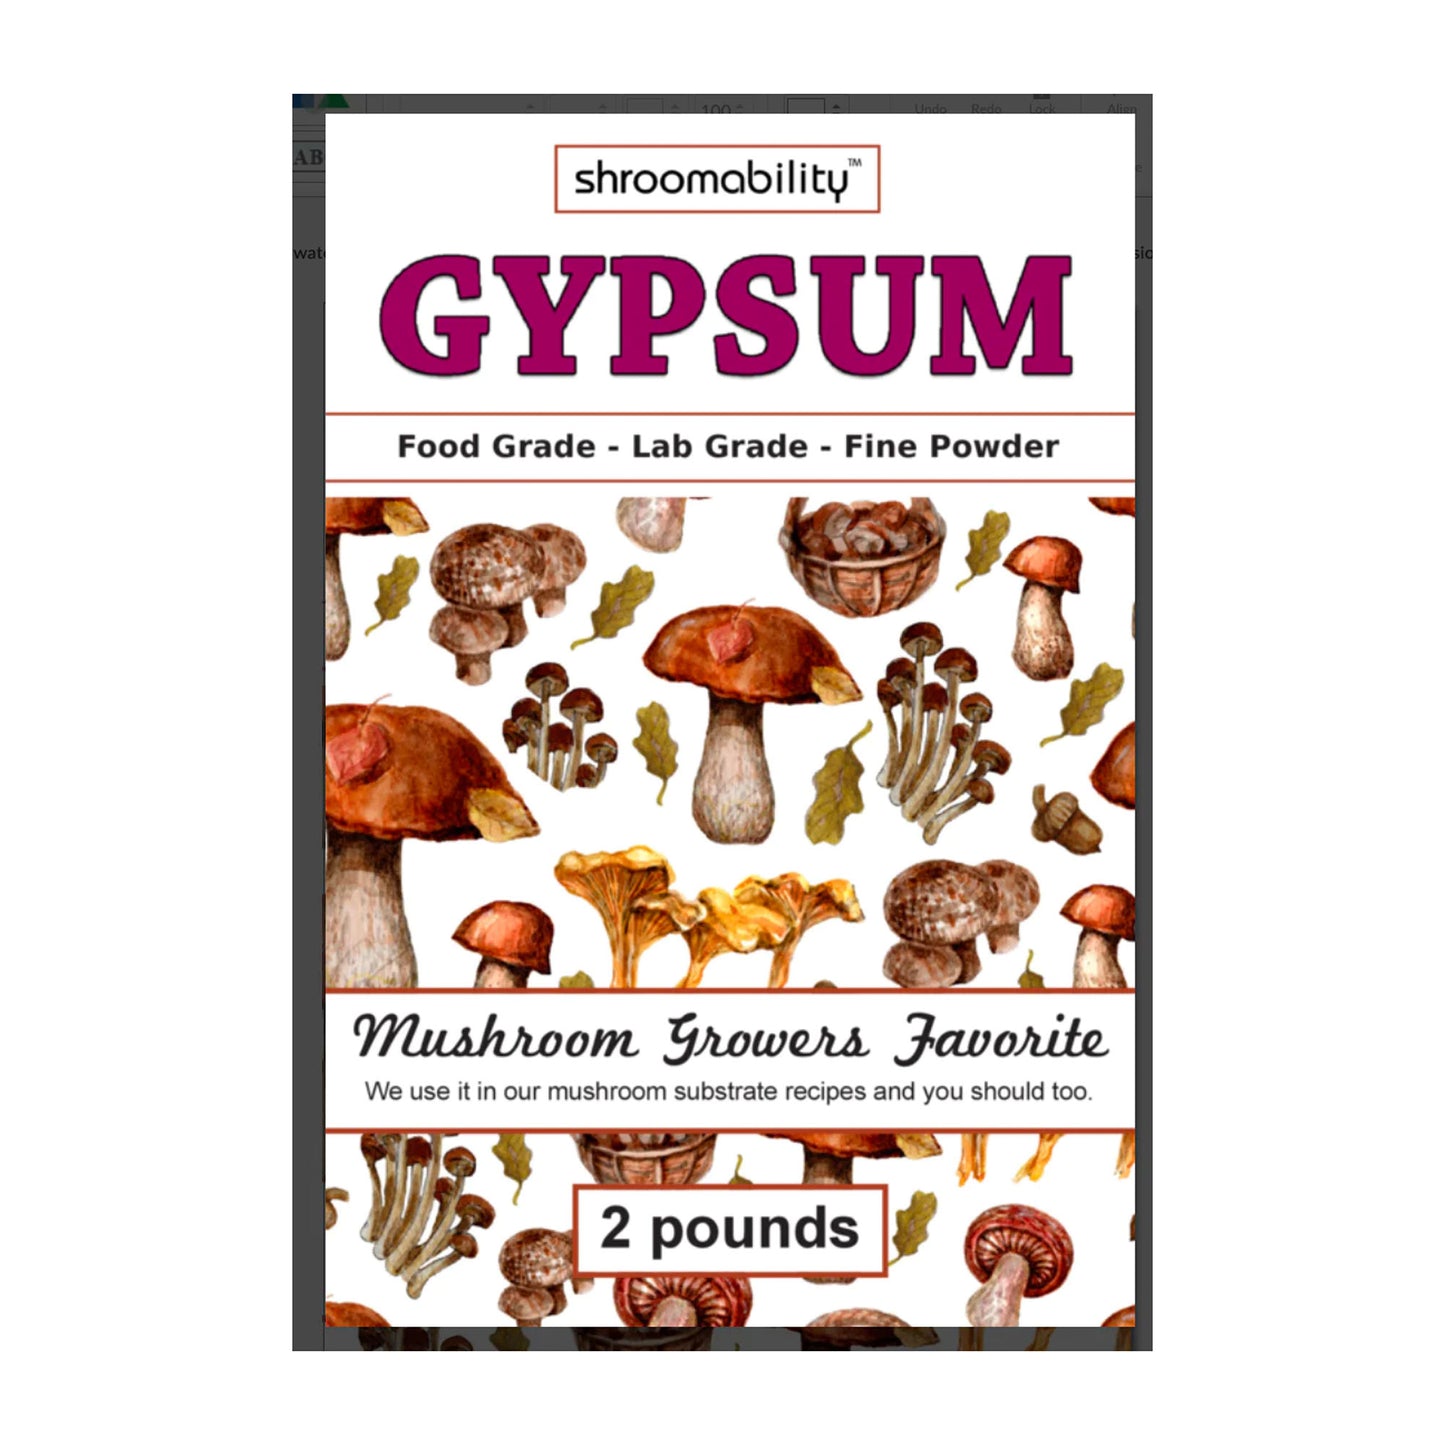 gypsum fine powder for mushroom cultivation food grade lab grade